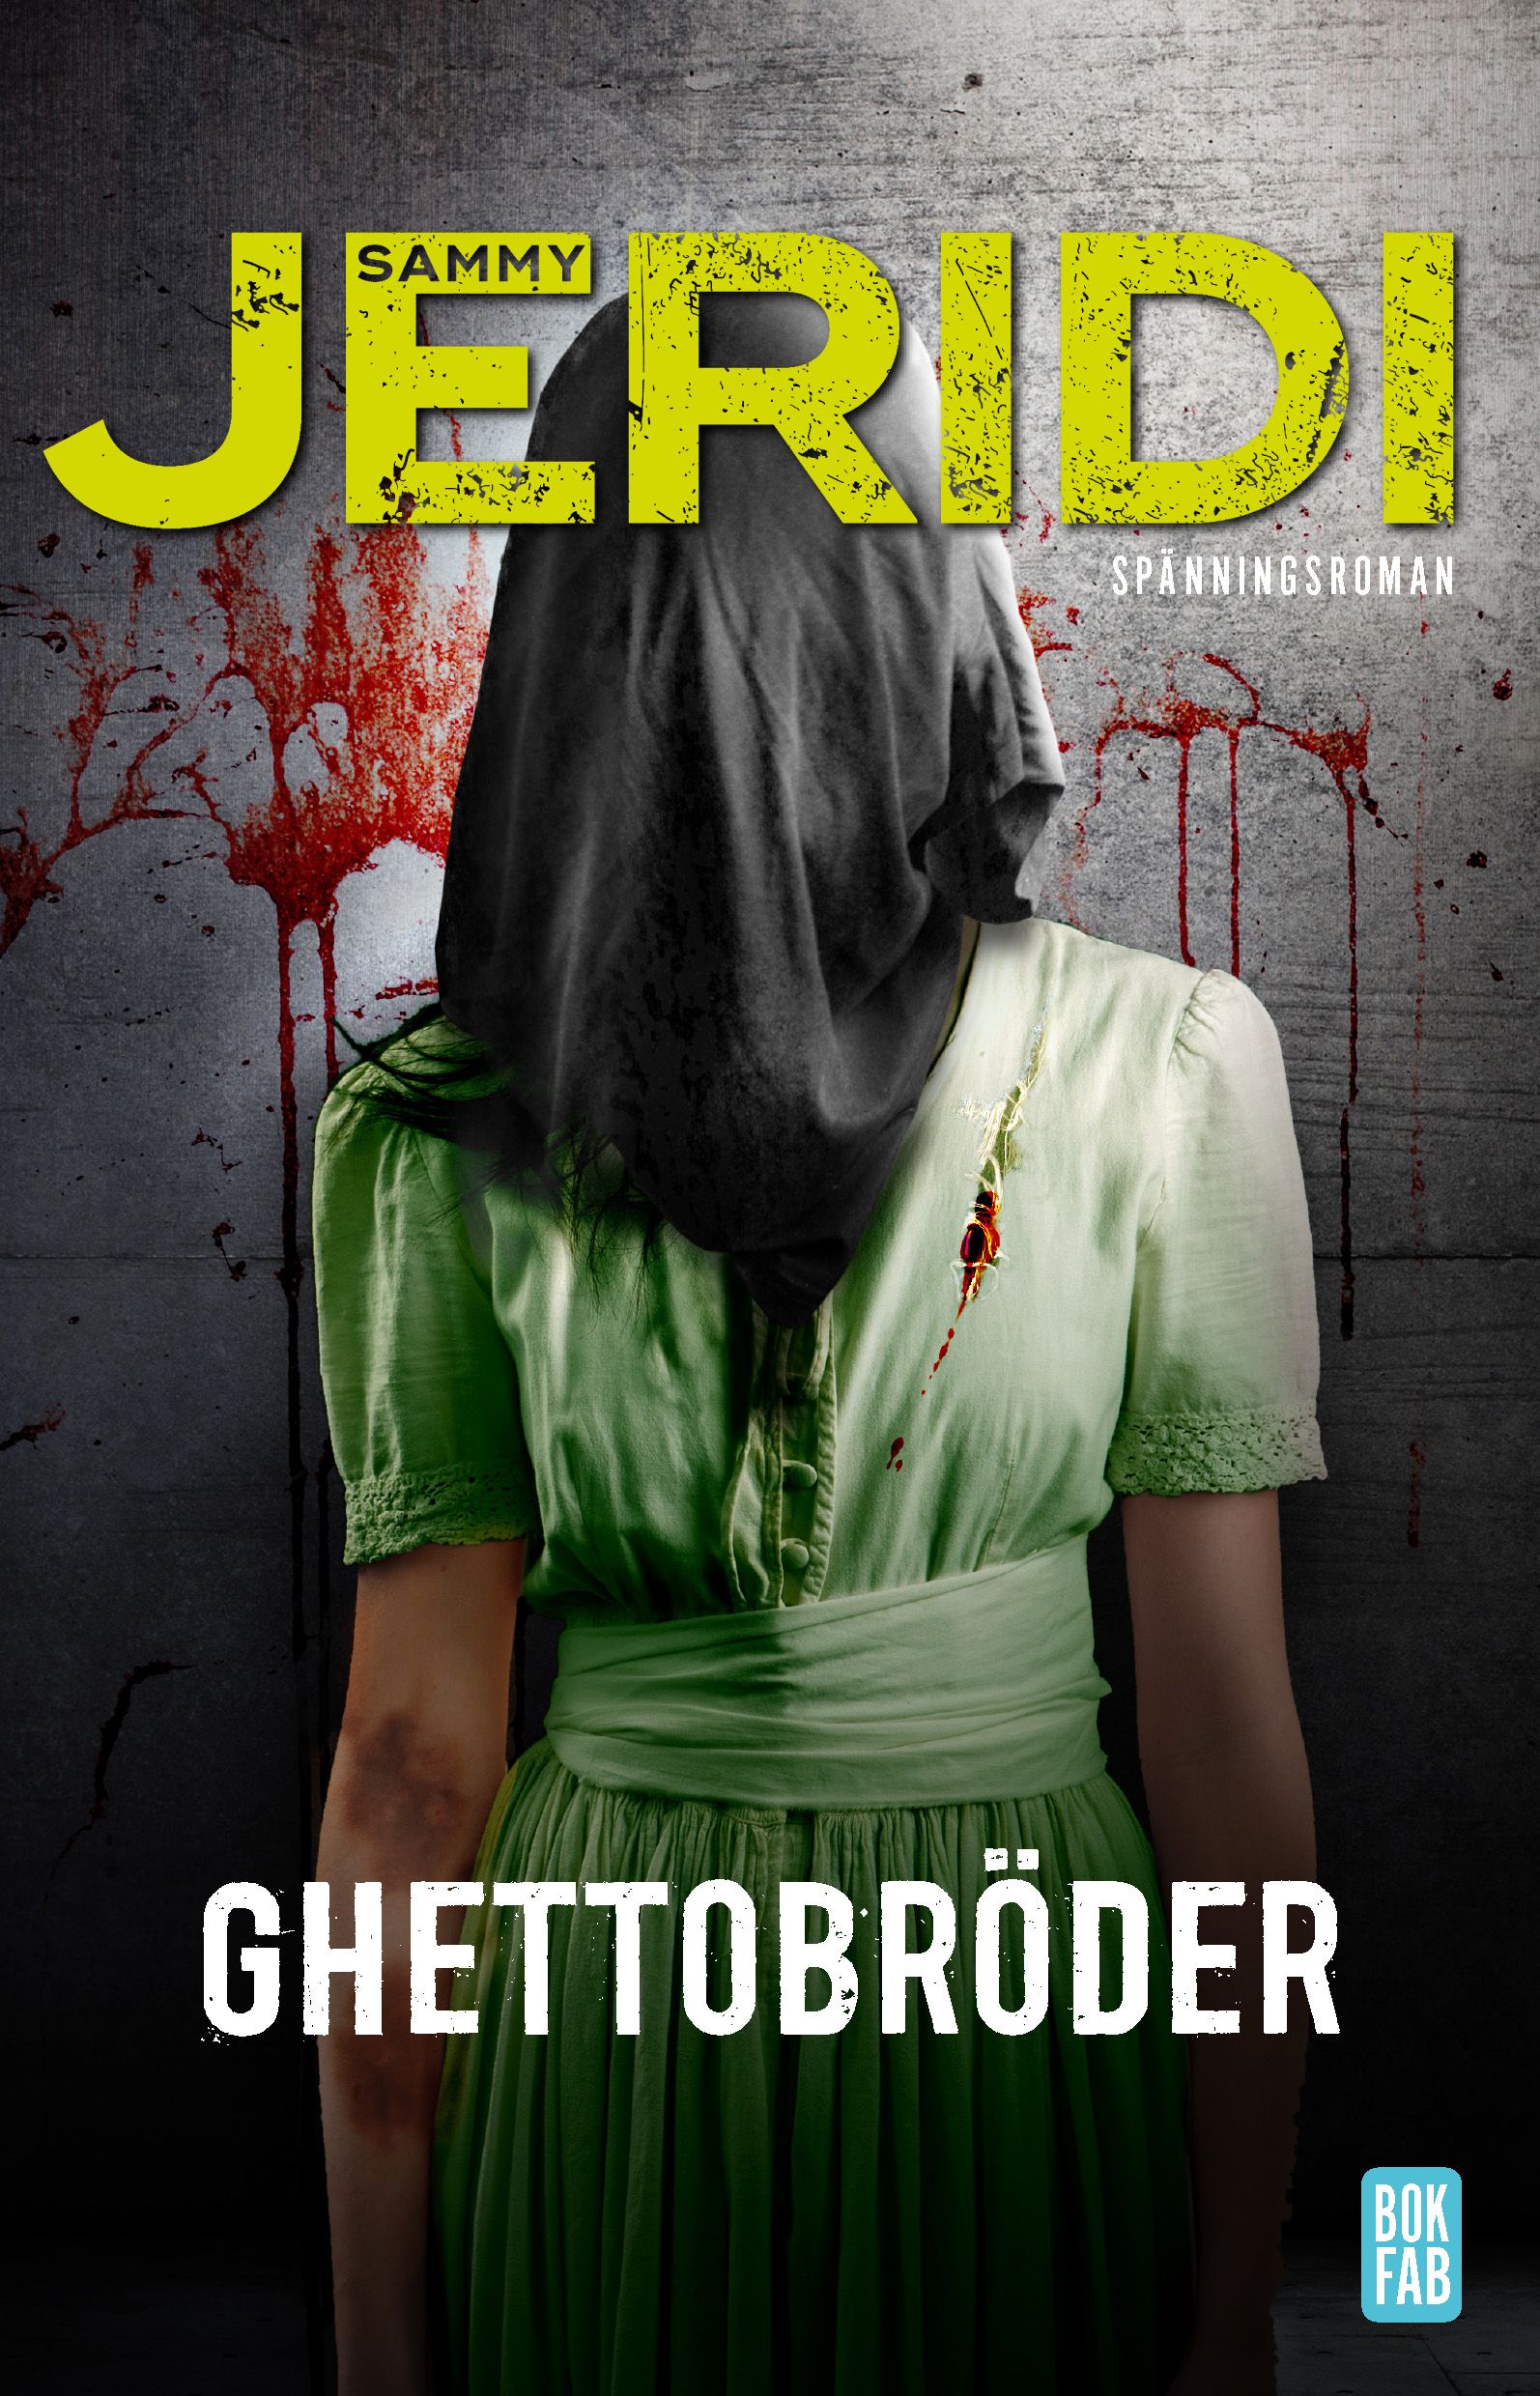 Ghettobröder, eBook by Sammy Jeridi